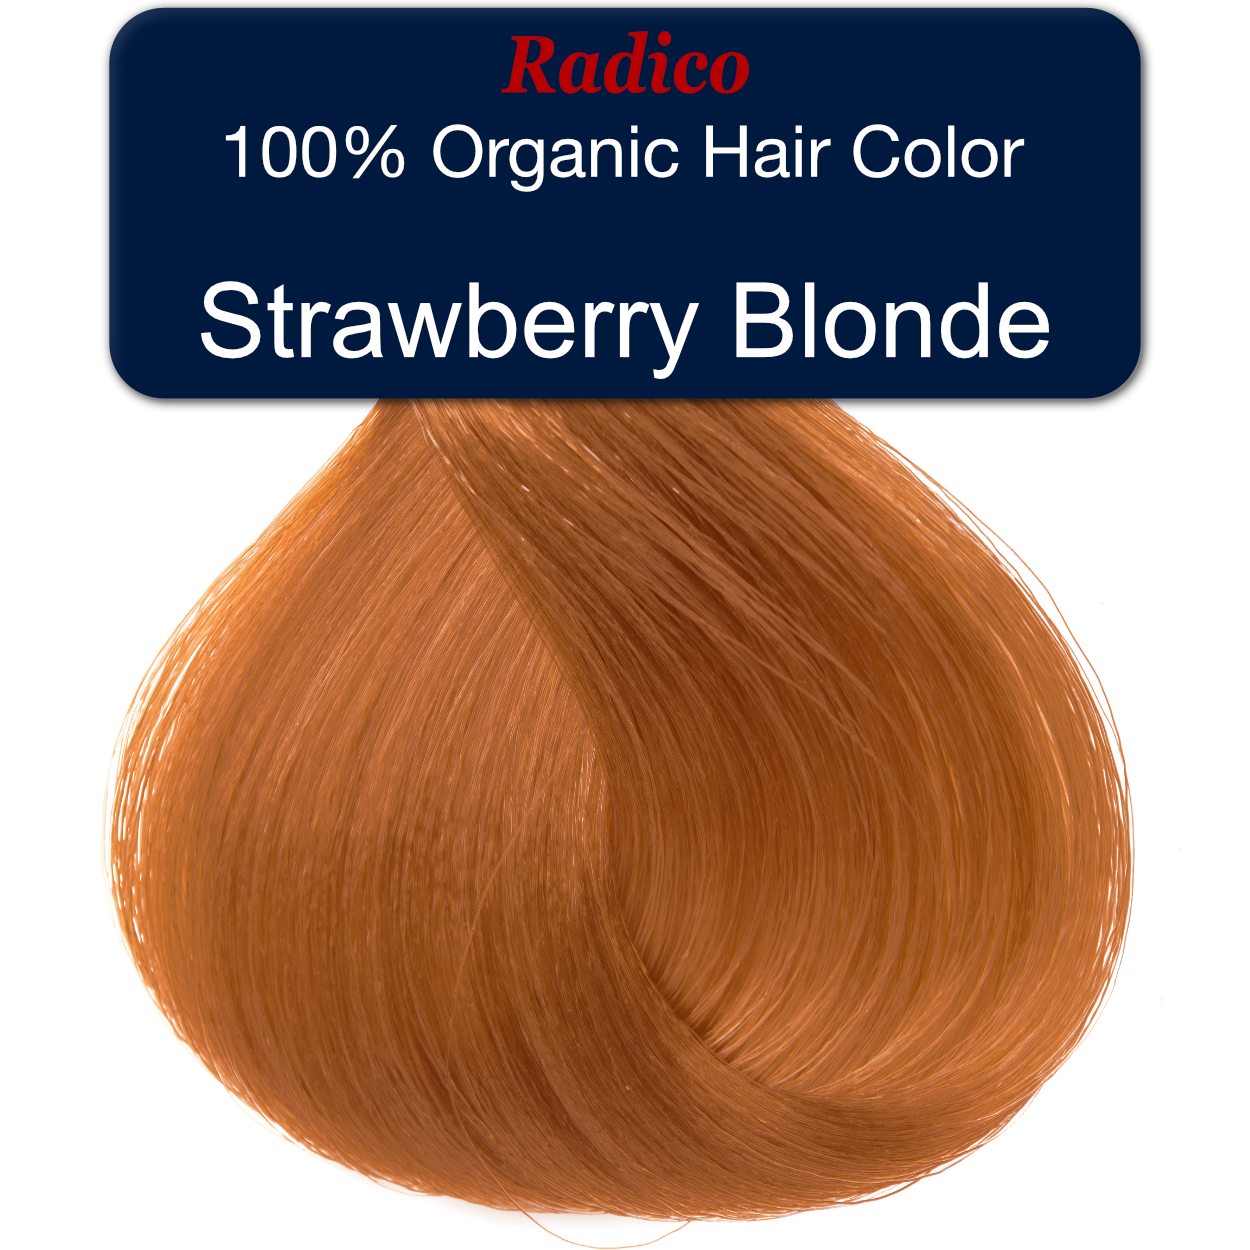 Strawberry Blonde Non Toxic And 100 Organic Hair Dye Radico Usa